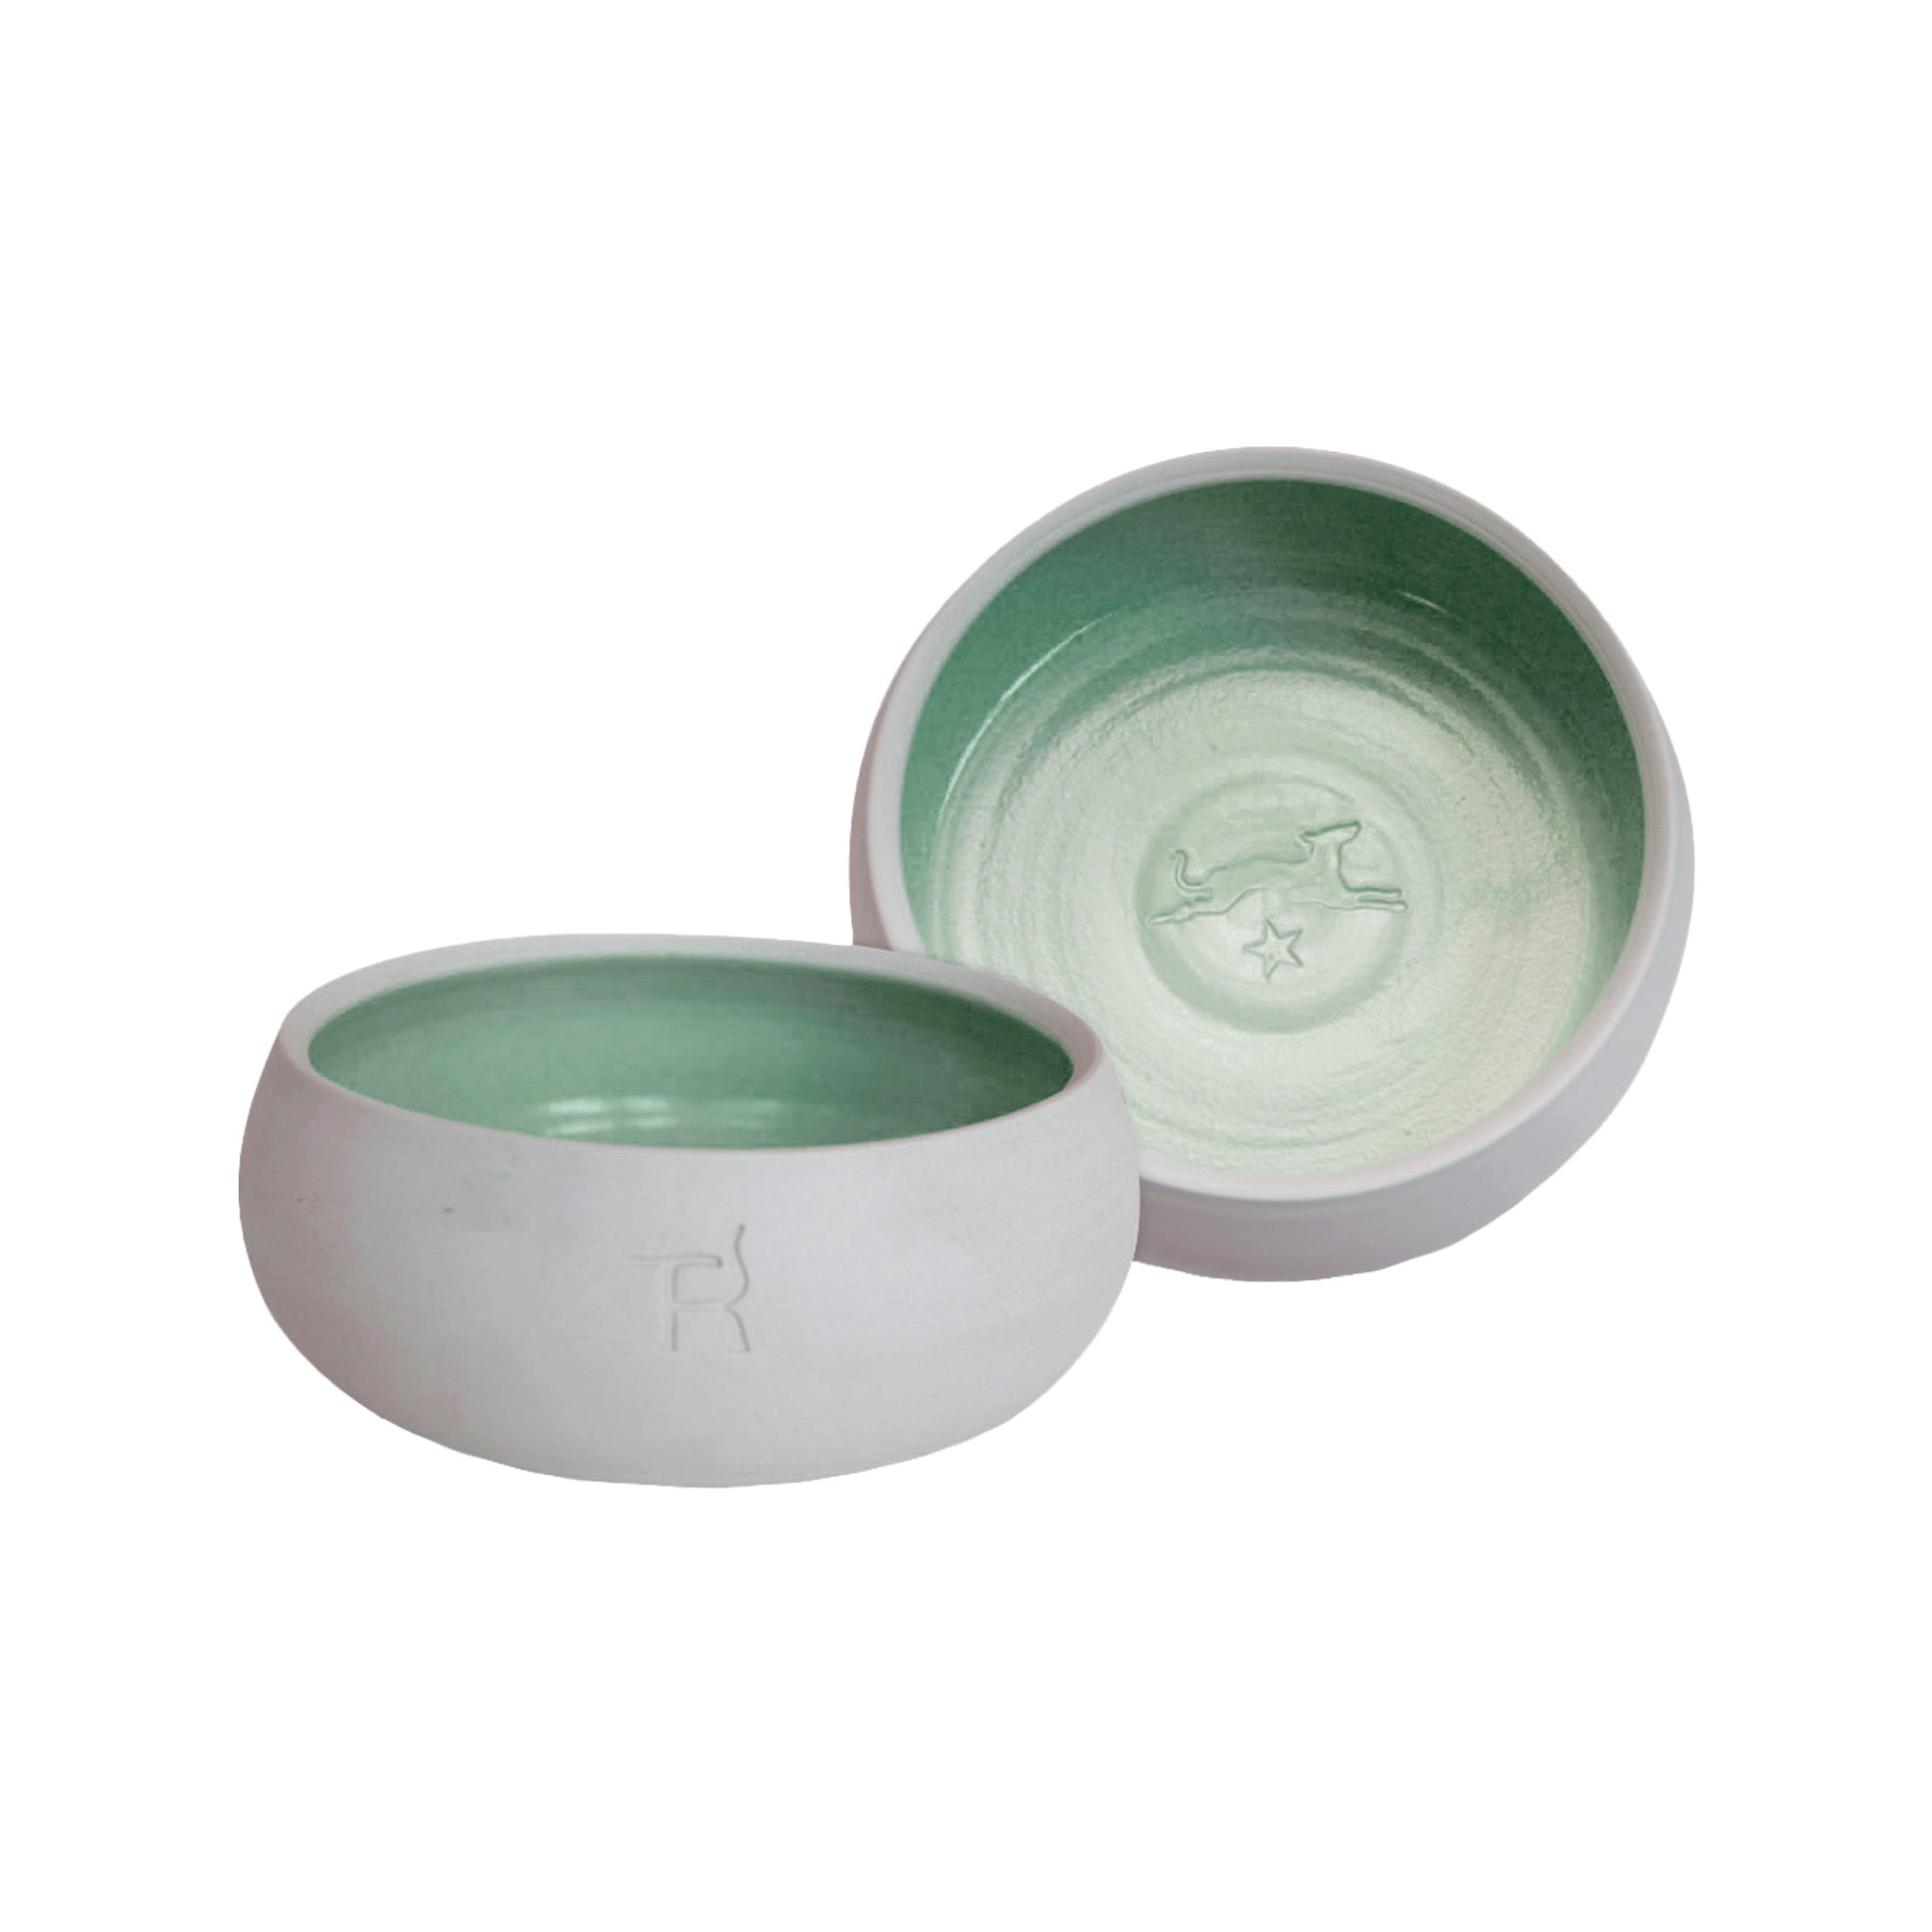 Ceramic dog bowl – natural colour / dark green